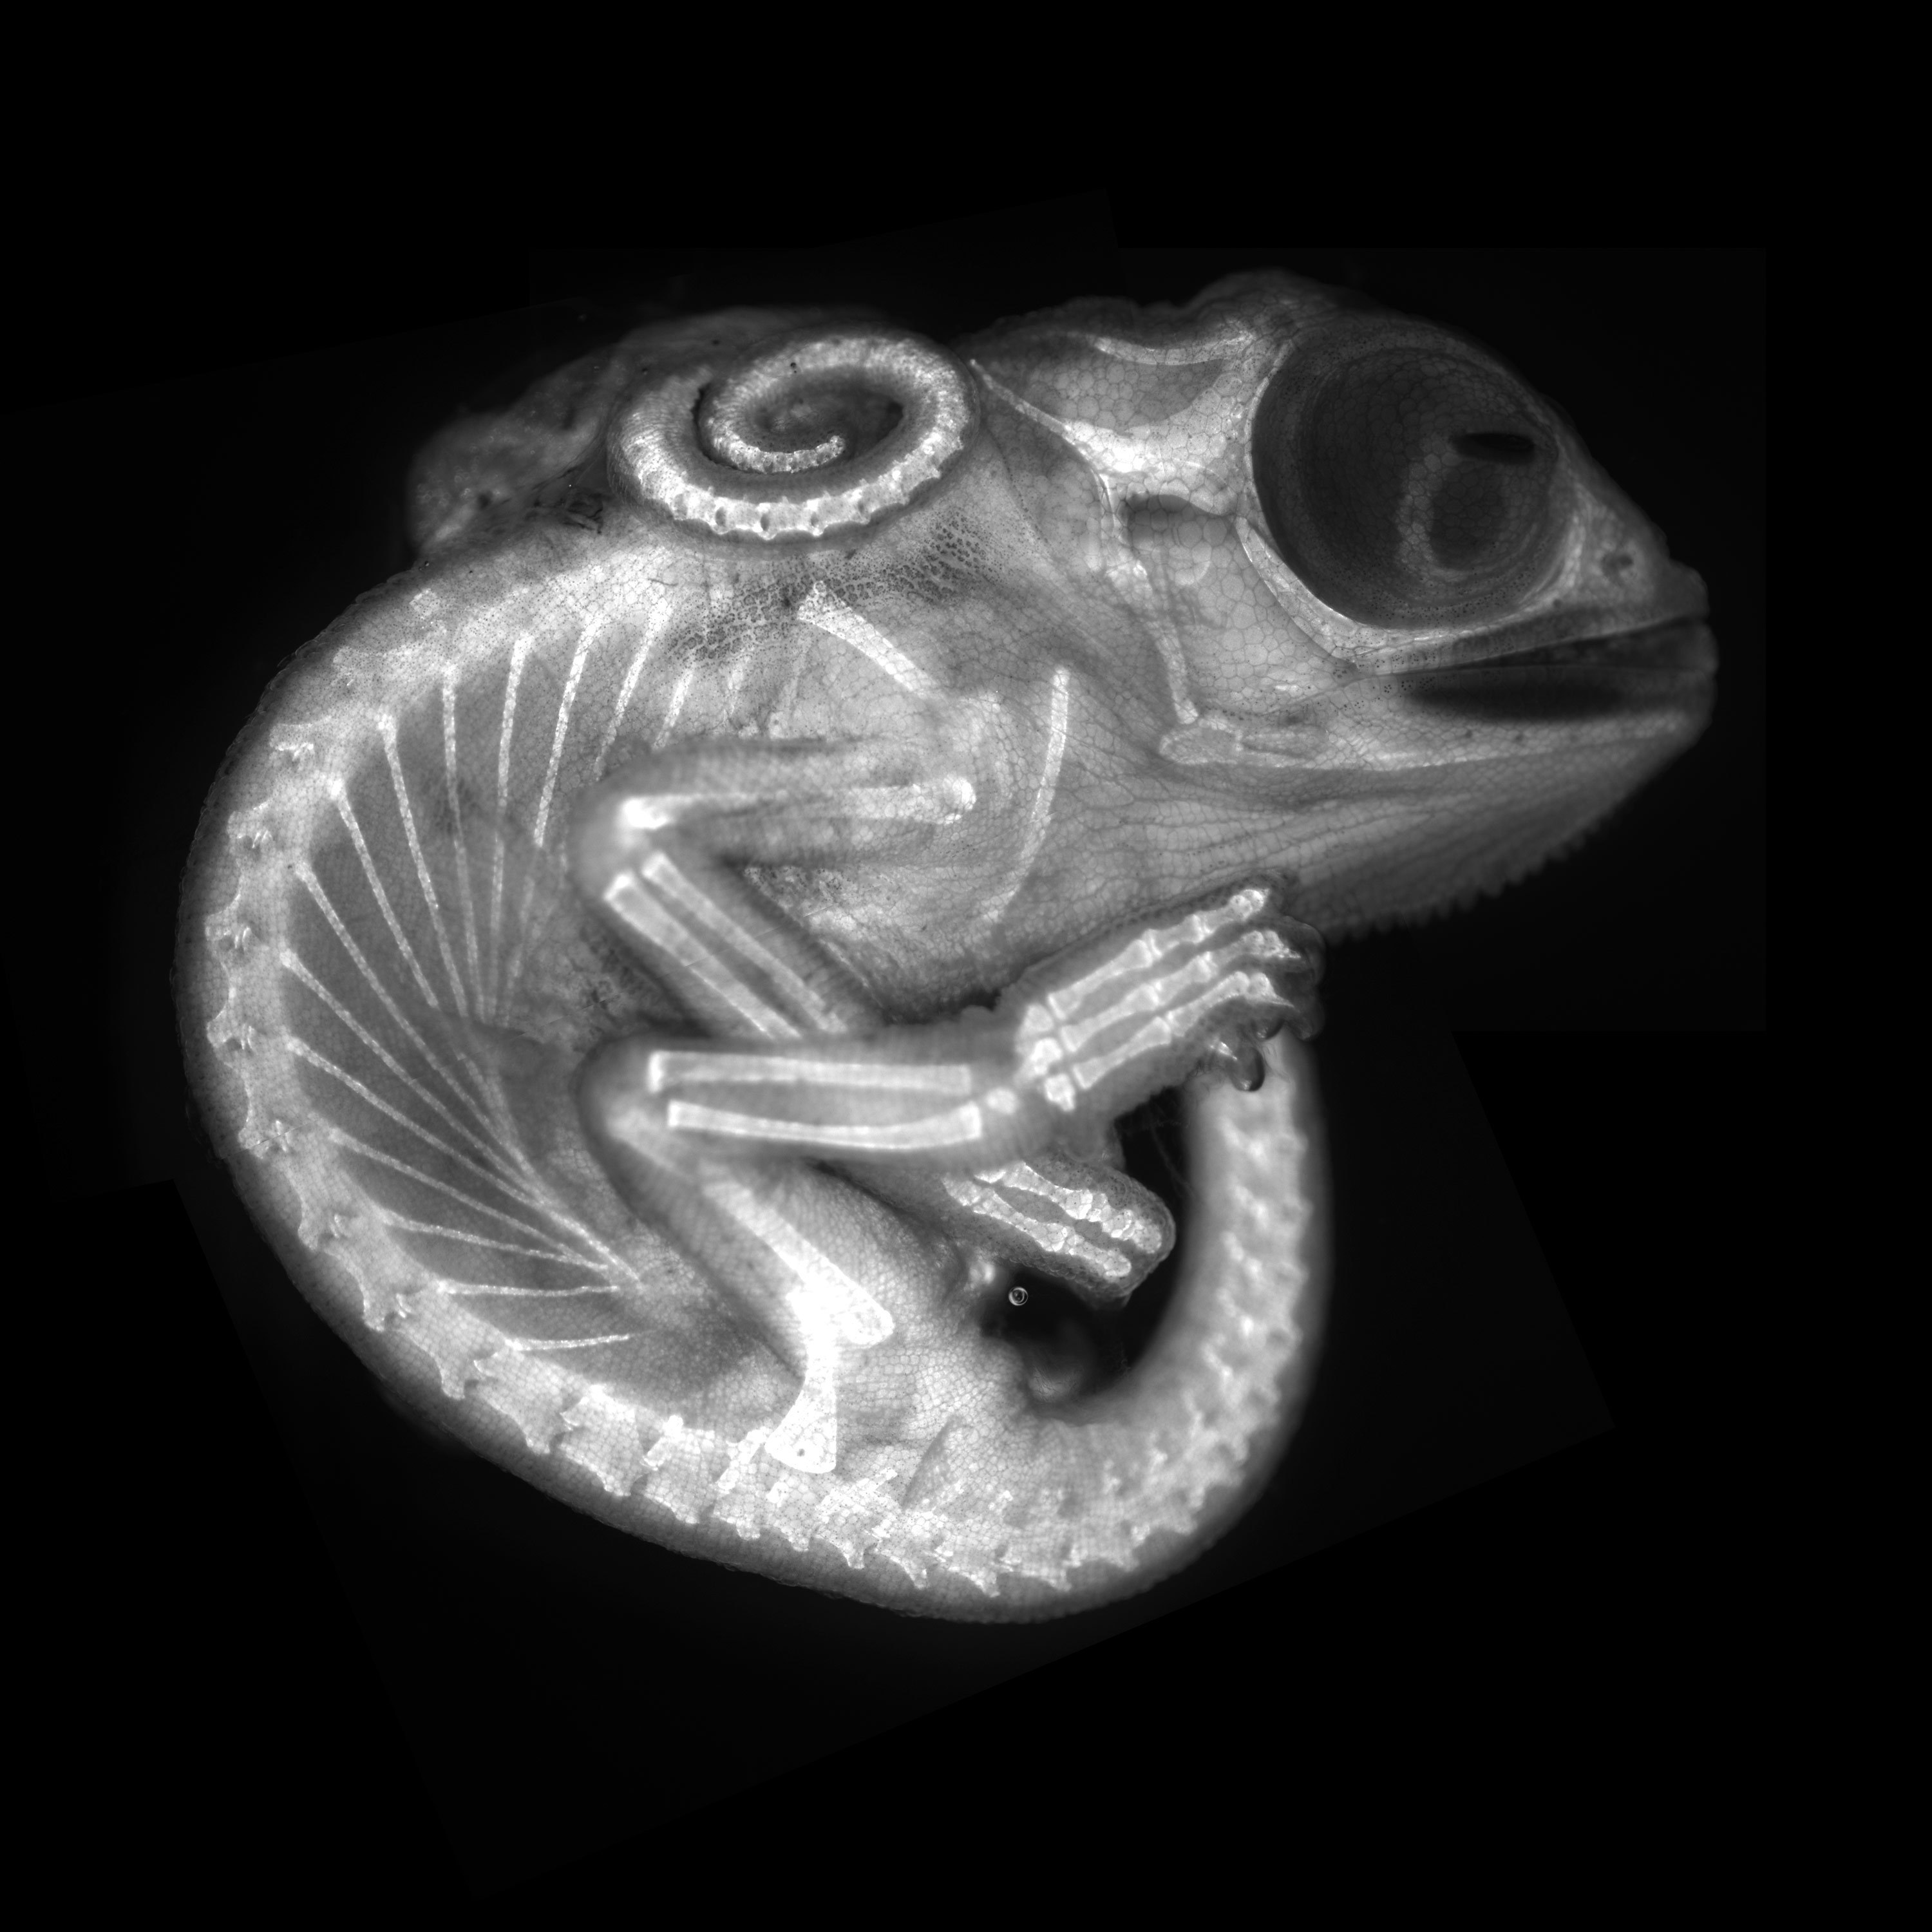 2020 nikon photomicrography competition winners - Chameleon embryo (autofluorescence)